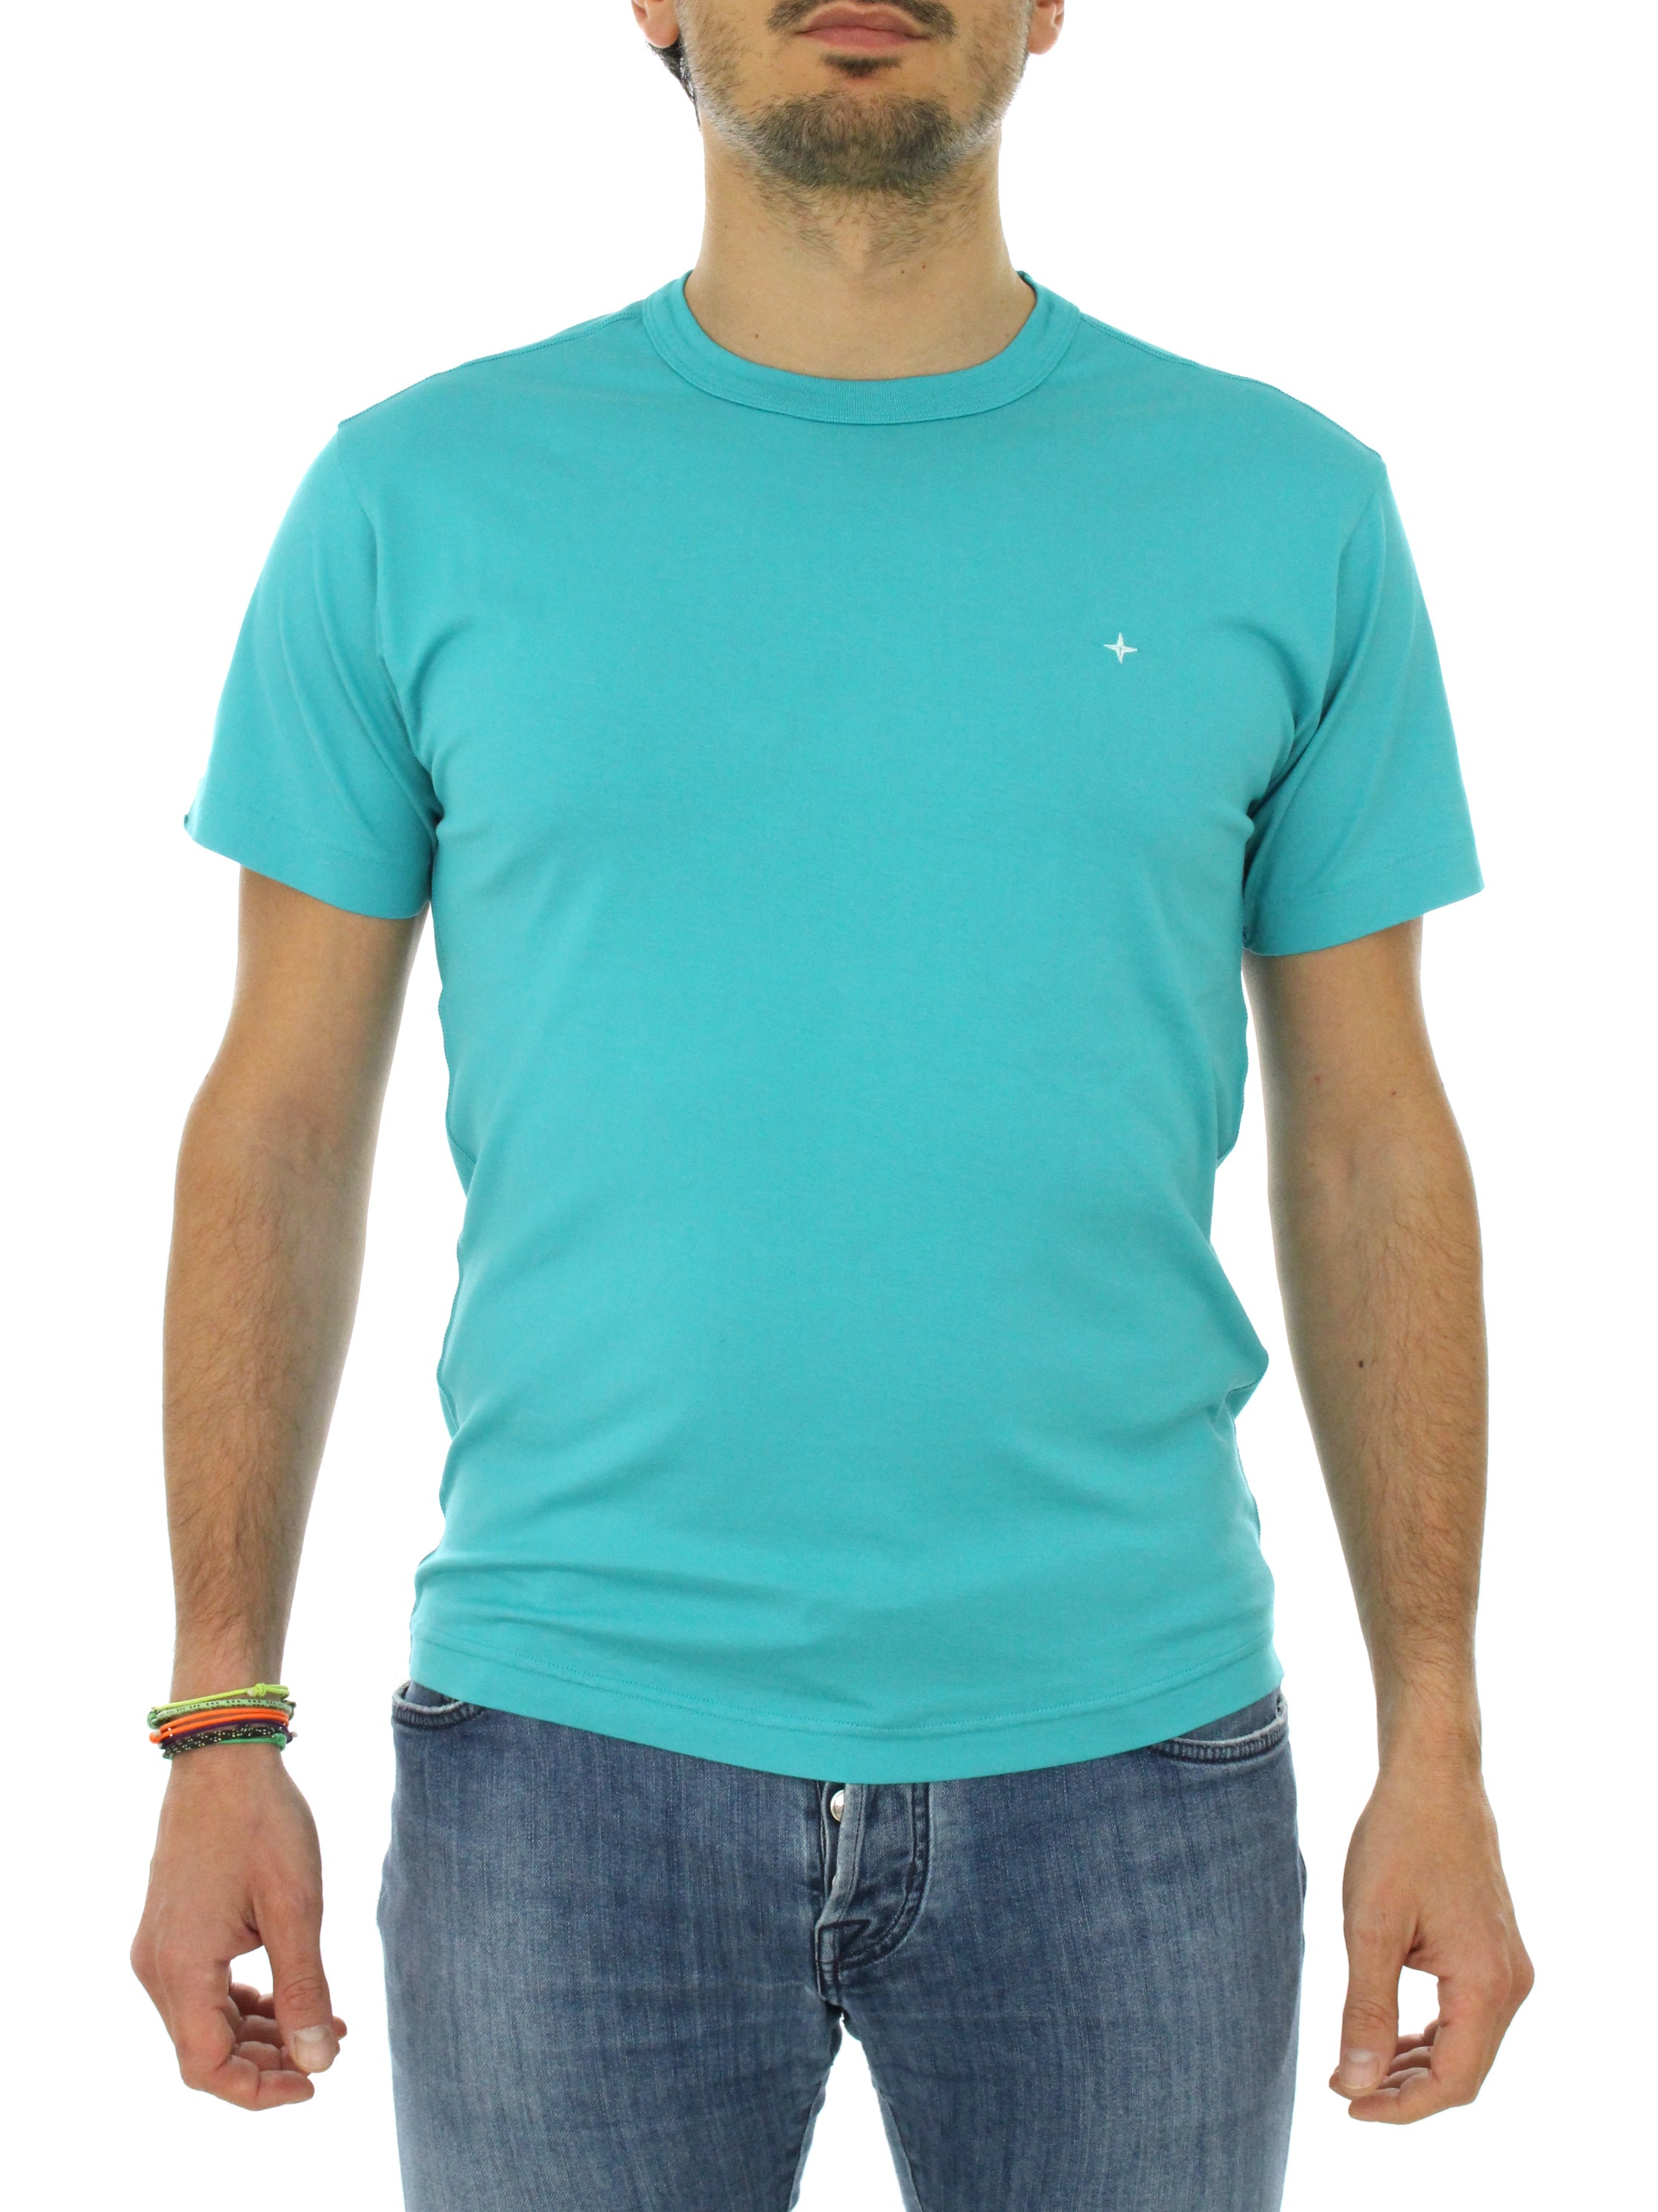 T-Shirt 721522913 turquoise